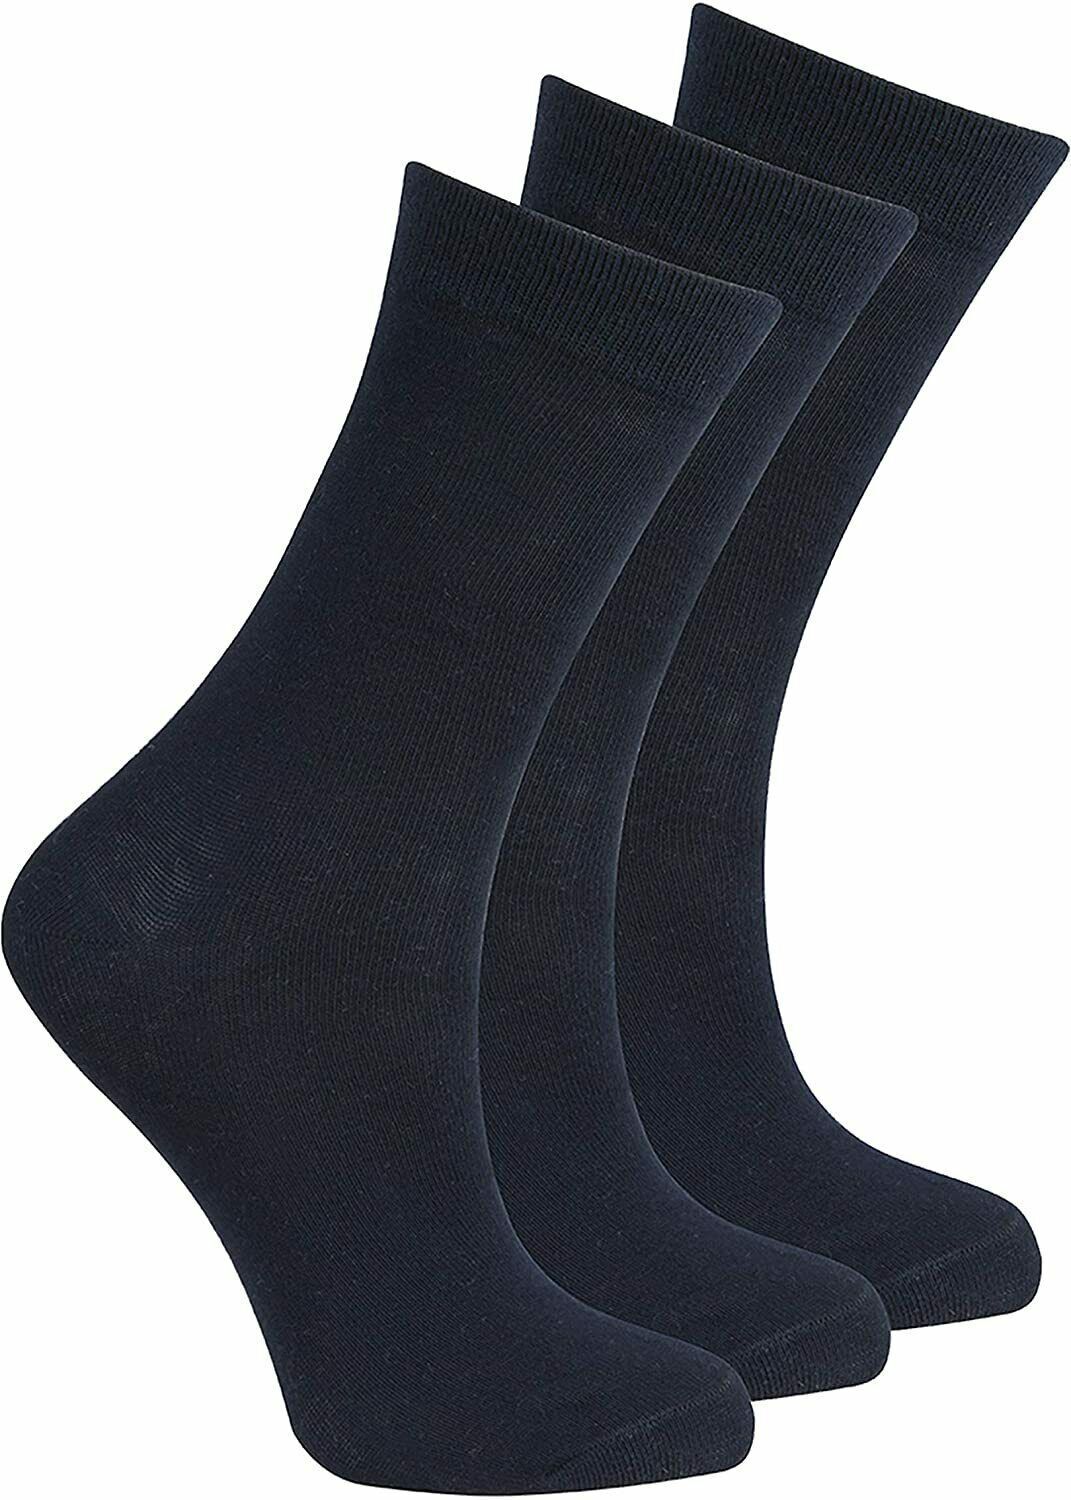 Unisex Child Ankle School Socks